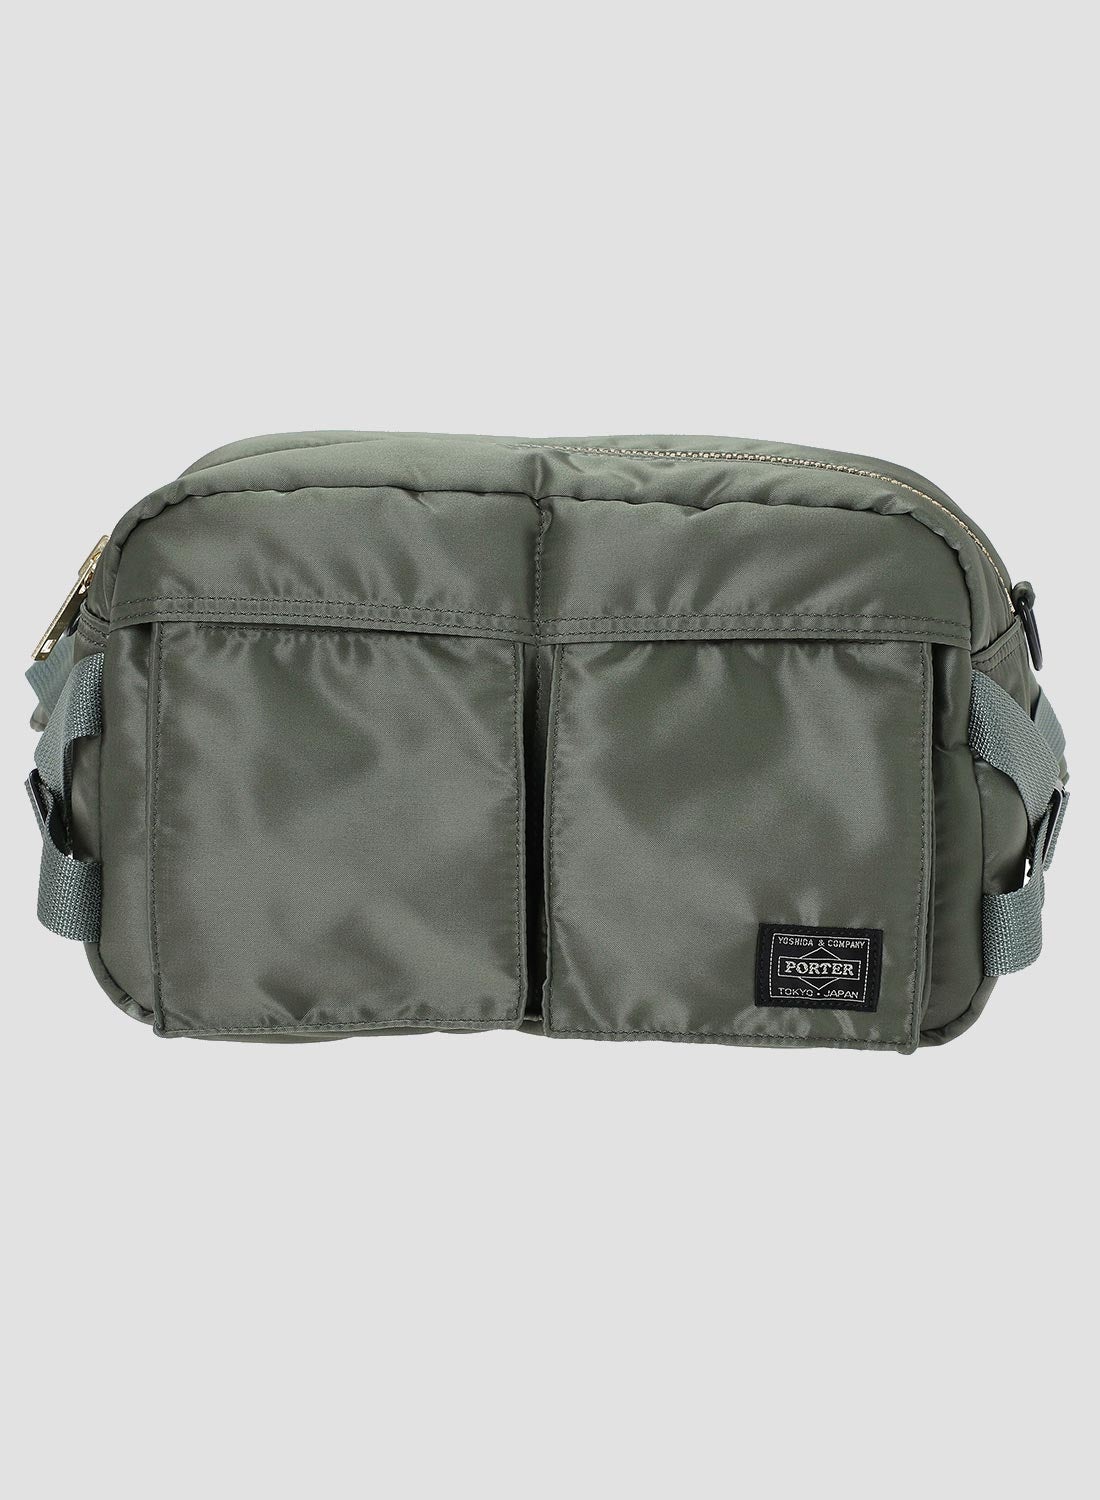 Porter-Yoshida & Co Tanker Waist Bag in Sage Green - 2